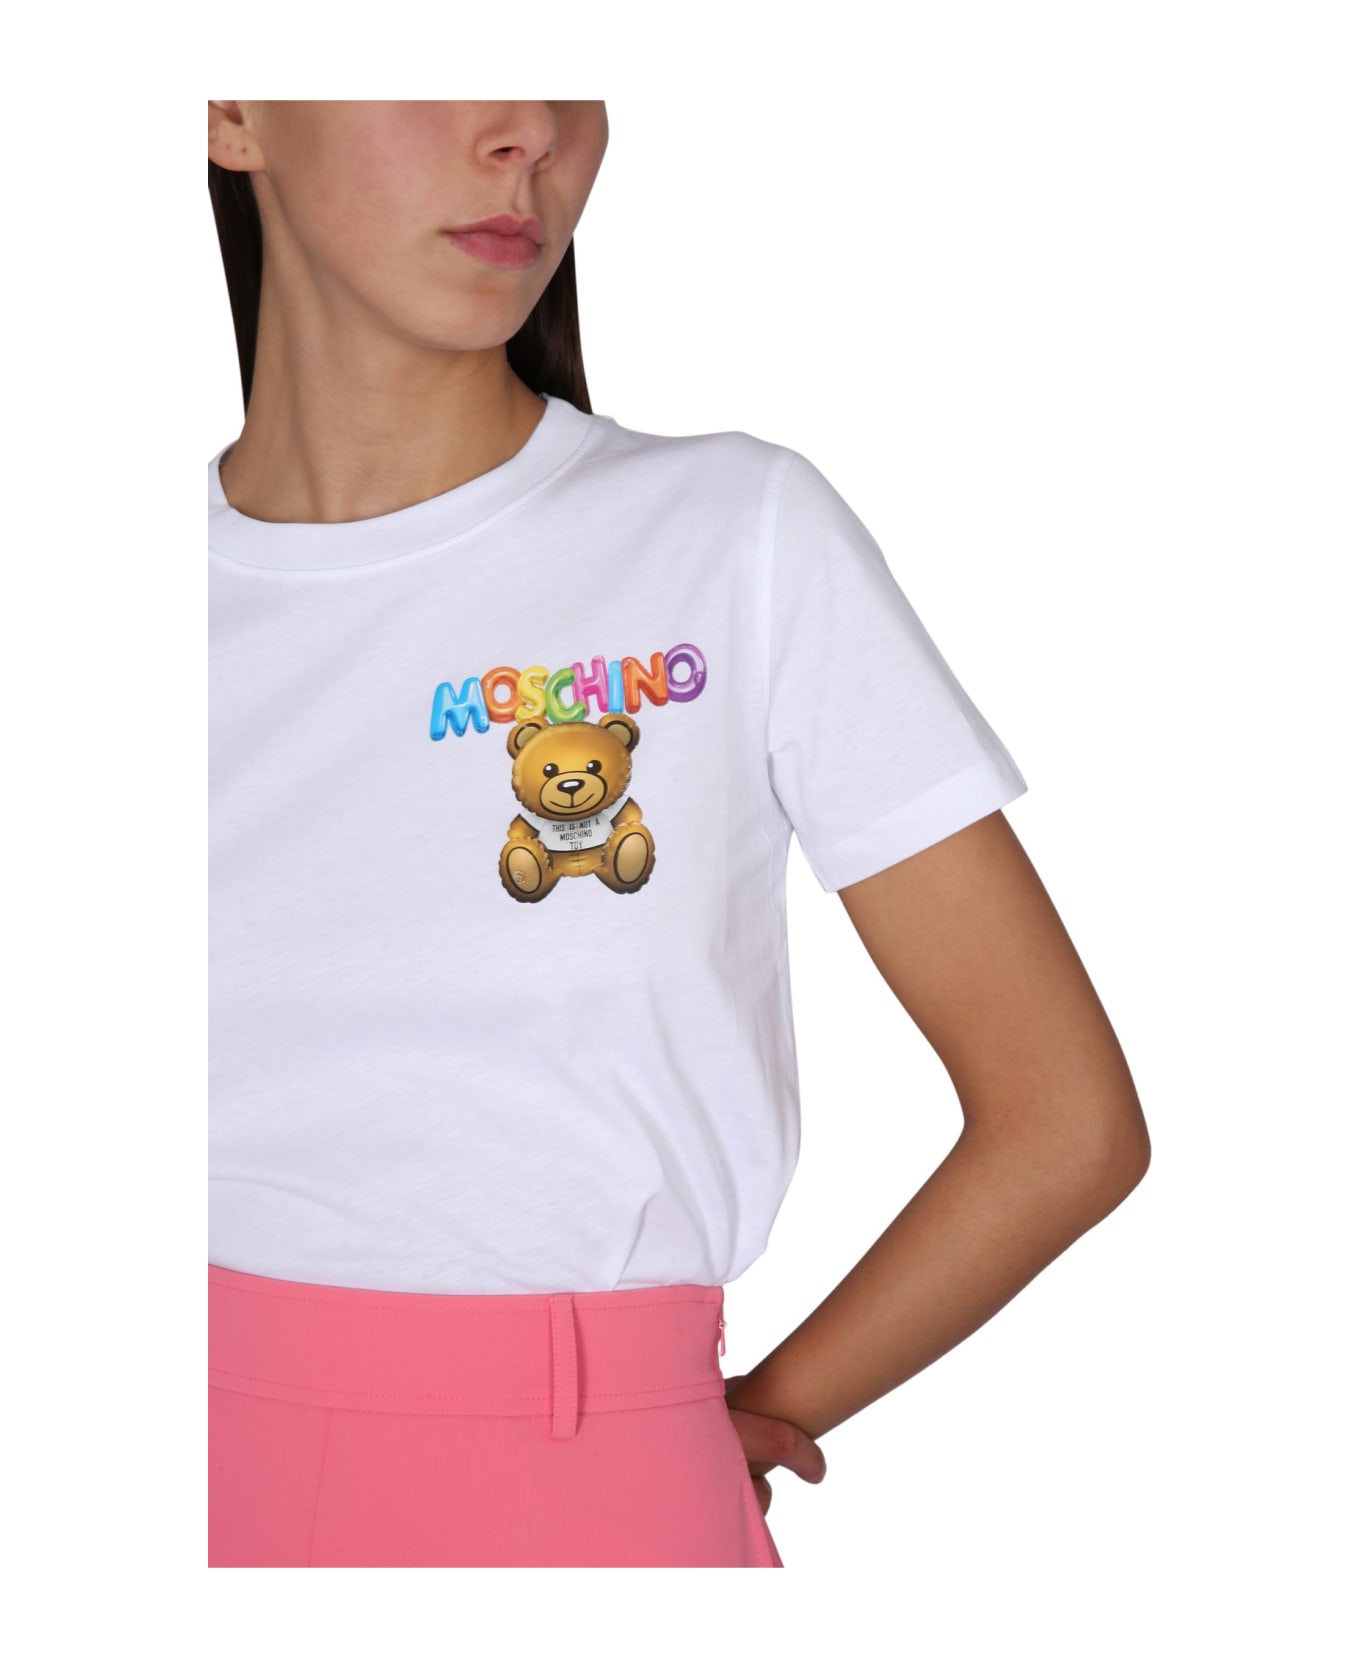 Moschino Teddy Bear T-shirt - White Tシャツ